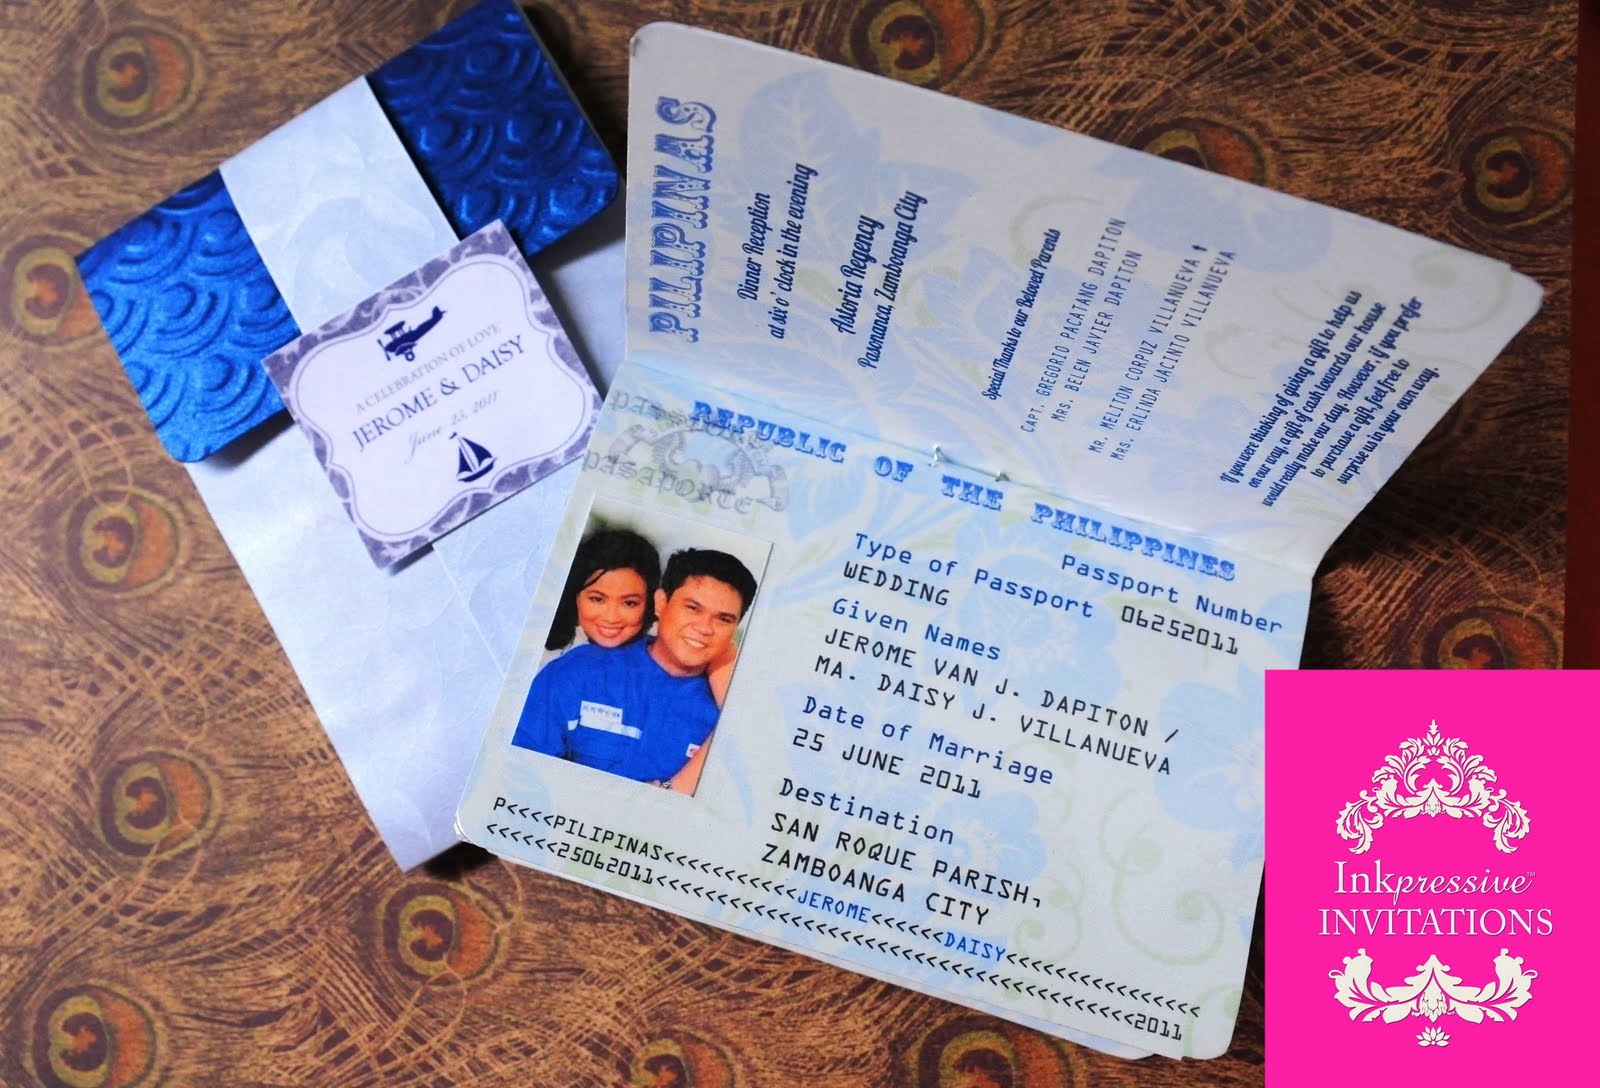 inkpressive-invitations-and-crafts-passport-invitation-blue-and-silver